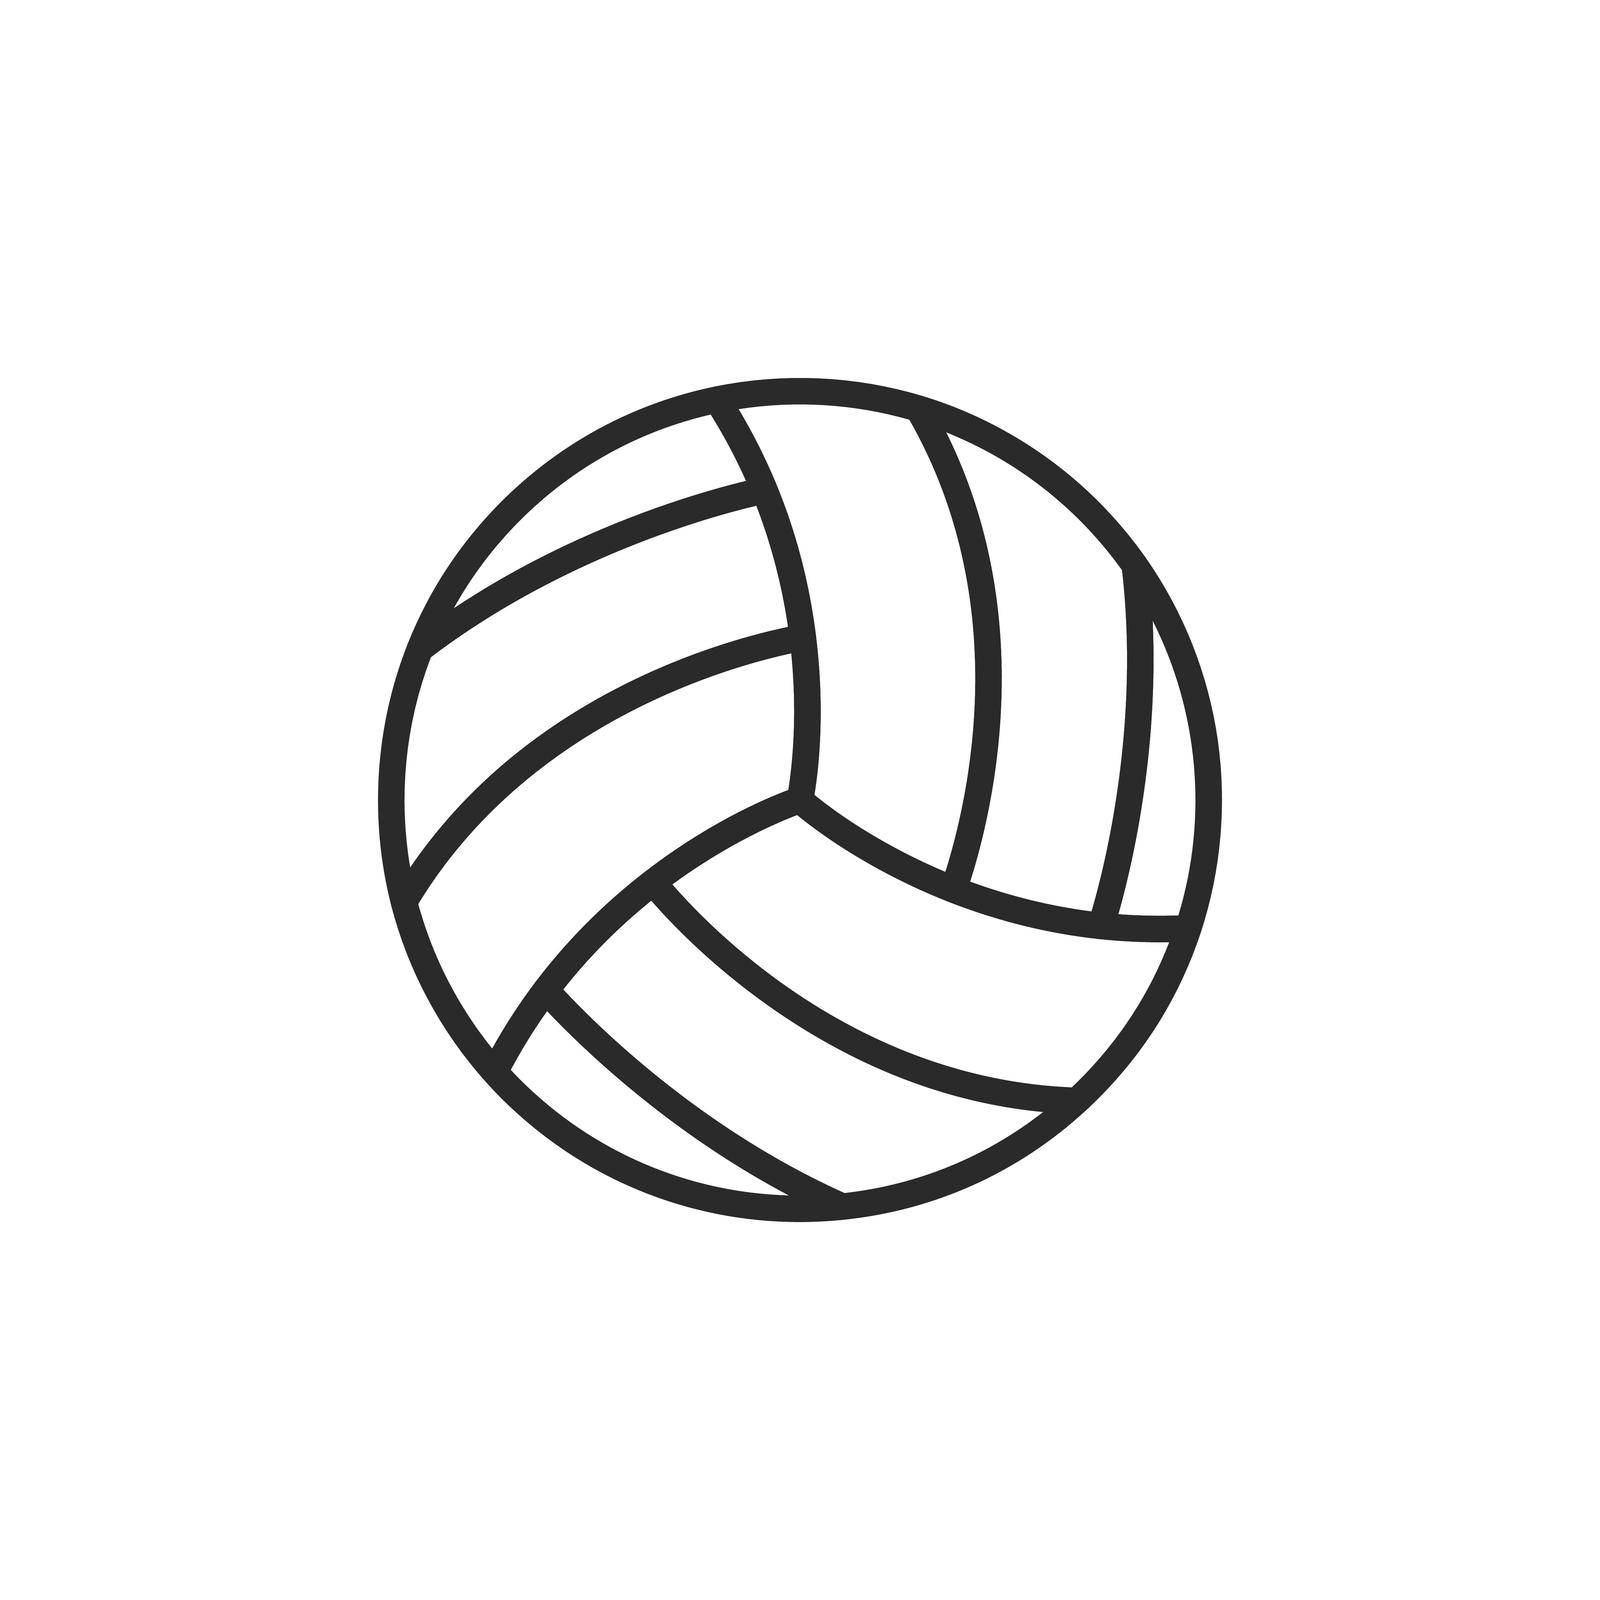 Volley ball logo vector flat design template